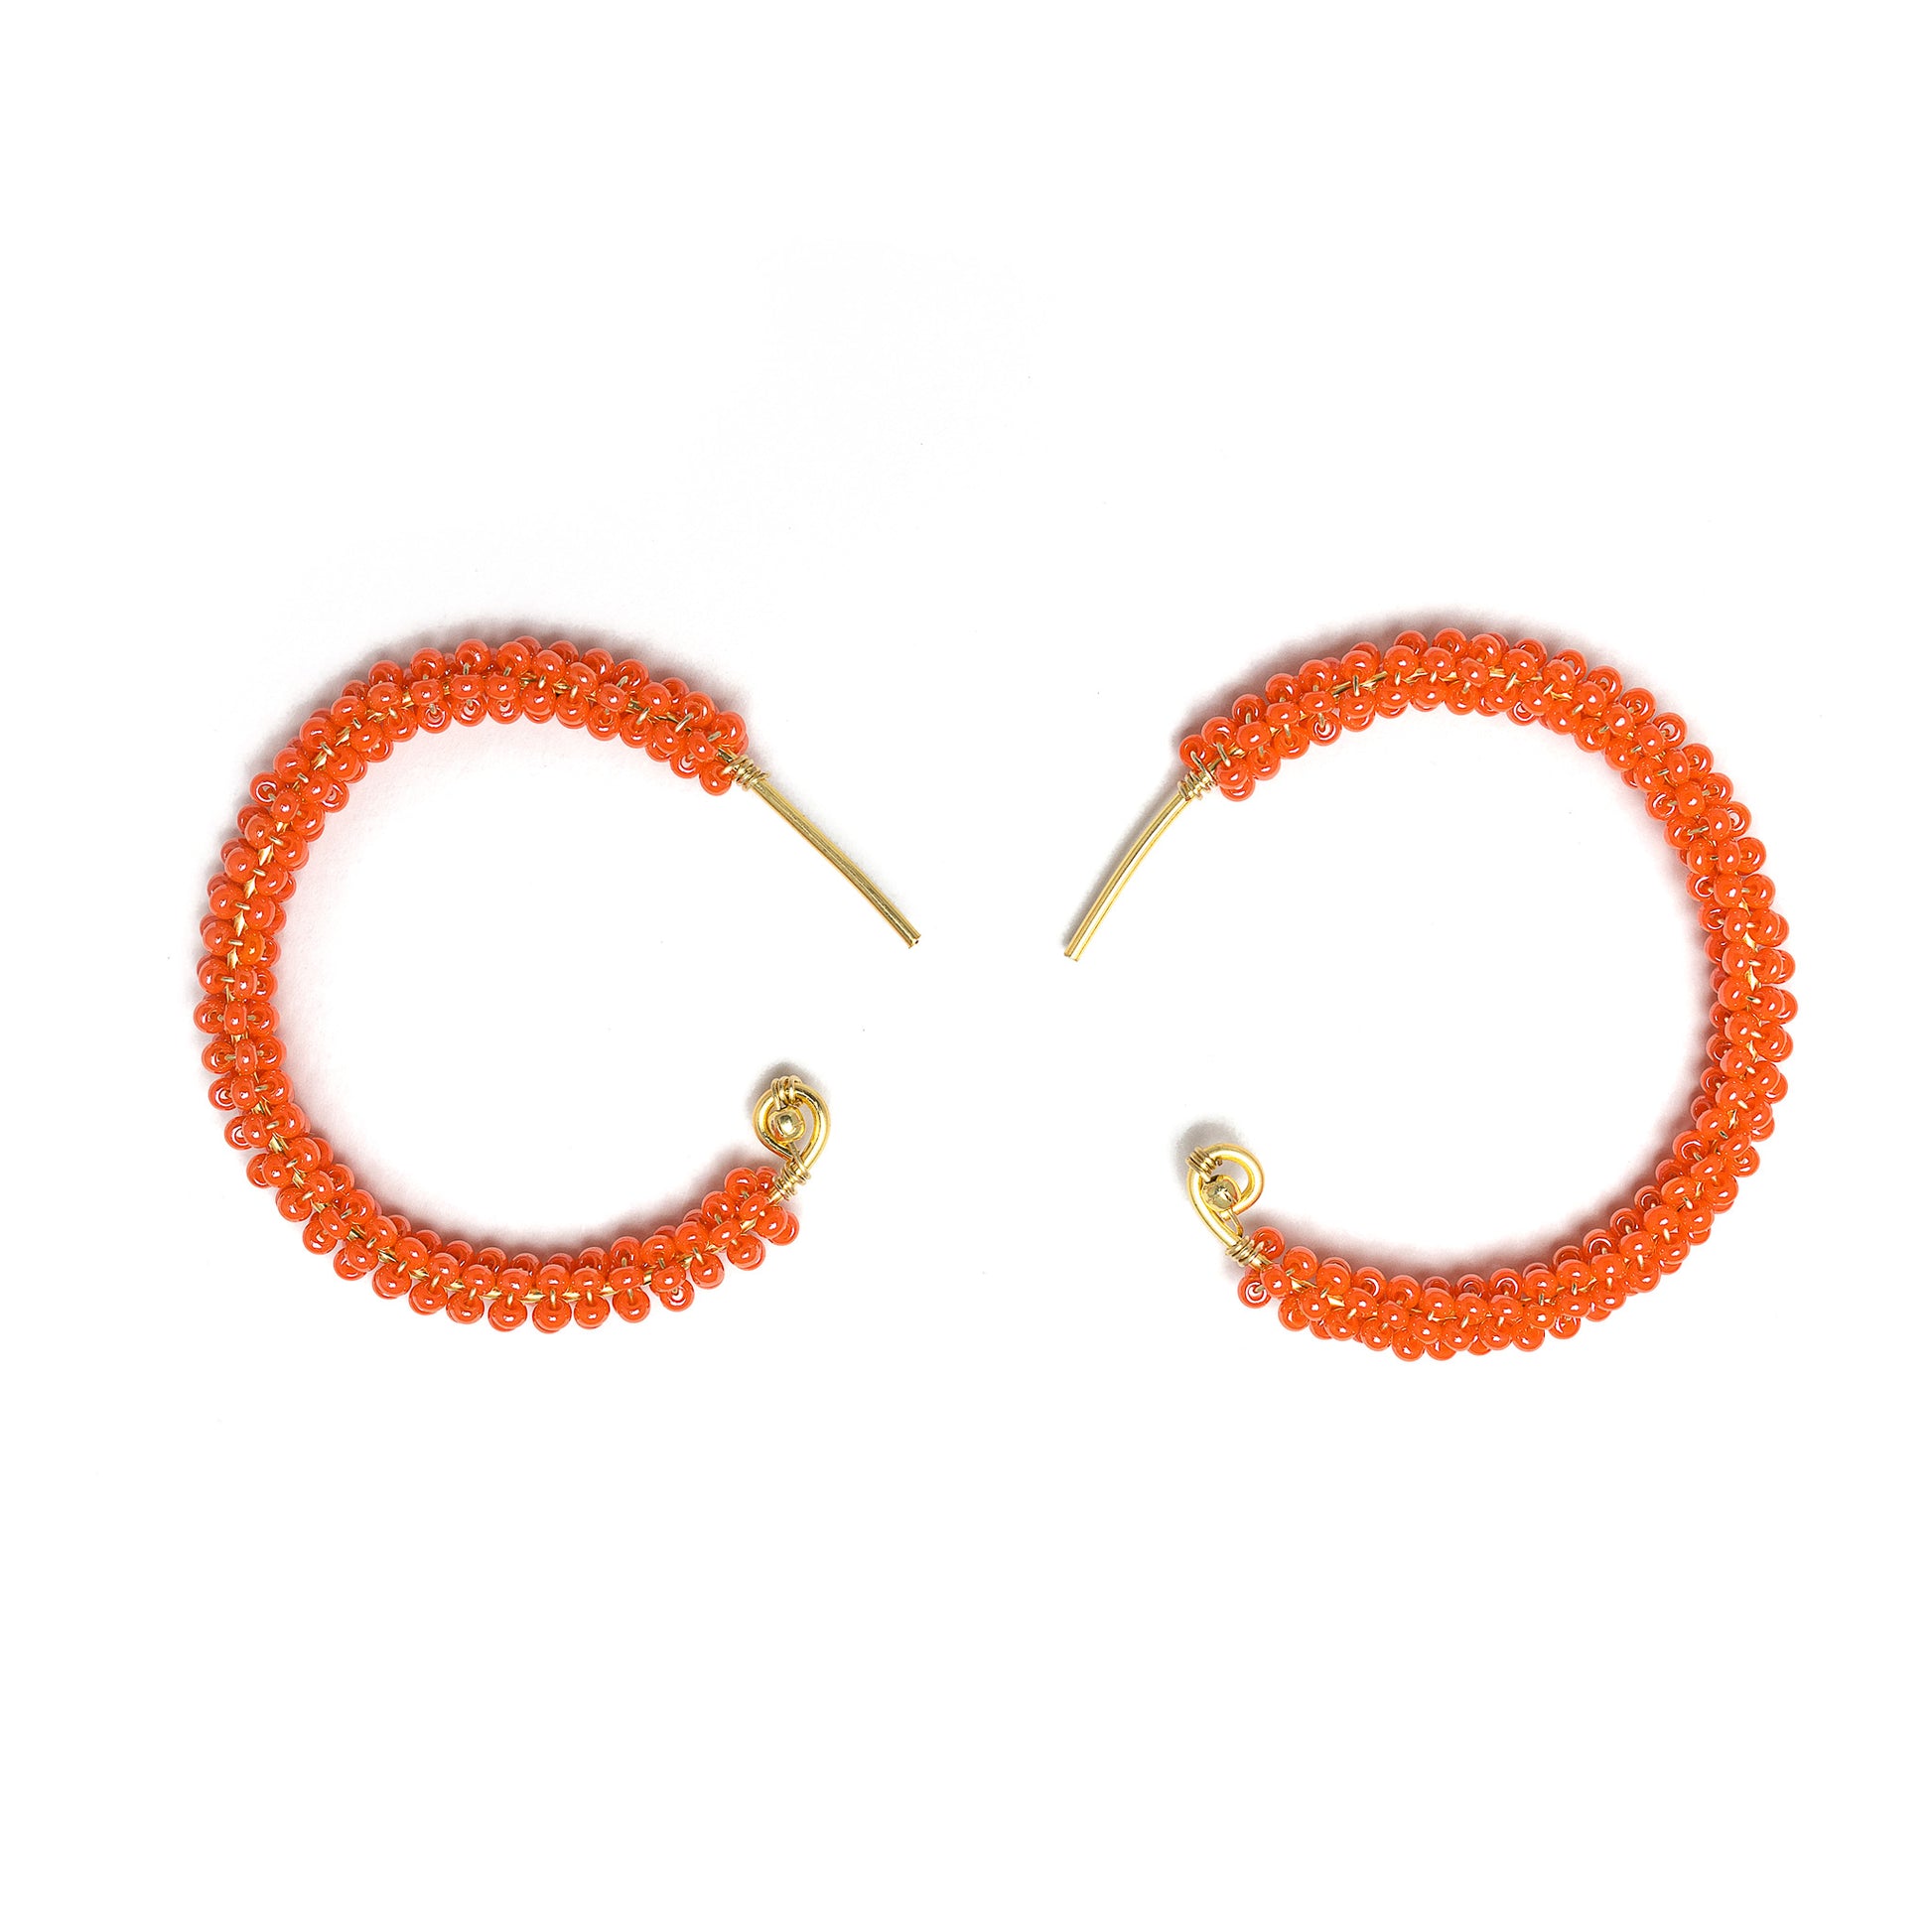 Florence gold Hoop Earrings are 1.5 inches long, Gold and Dark Orange Earrings. Wire Wrapped Earrings. Lightweight and comfortable earrings. Handmade for women. Open hoop earrings.